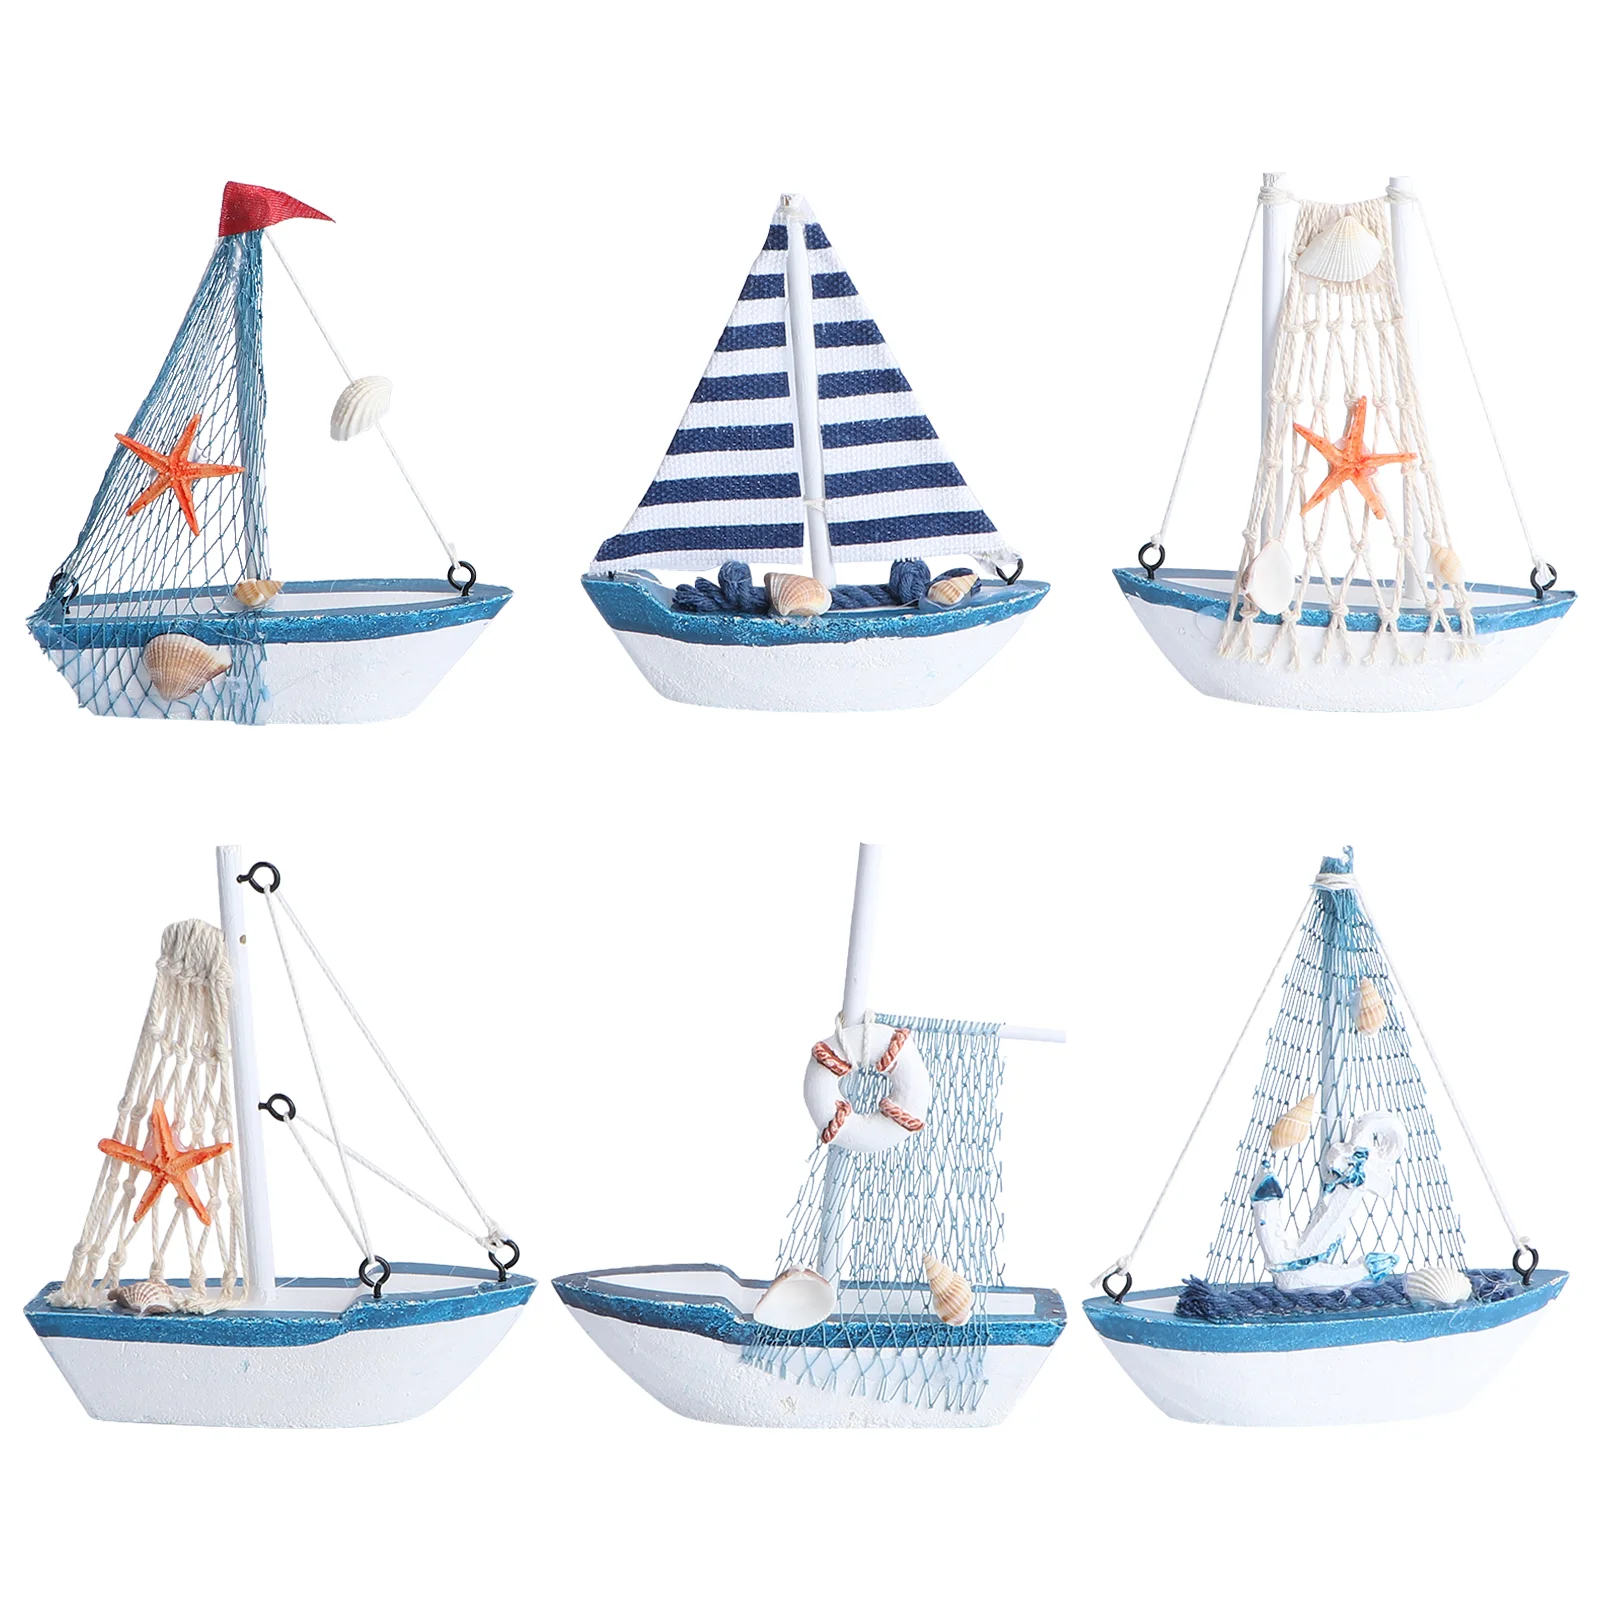 

6 Pcs Boat Model Mediterranean Style Sailboat Ship Desktop Ornament Toys Gift MDF Seaside Table Decor Sailing